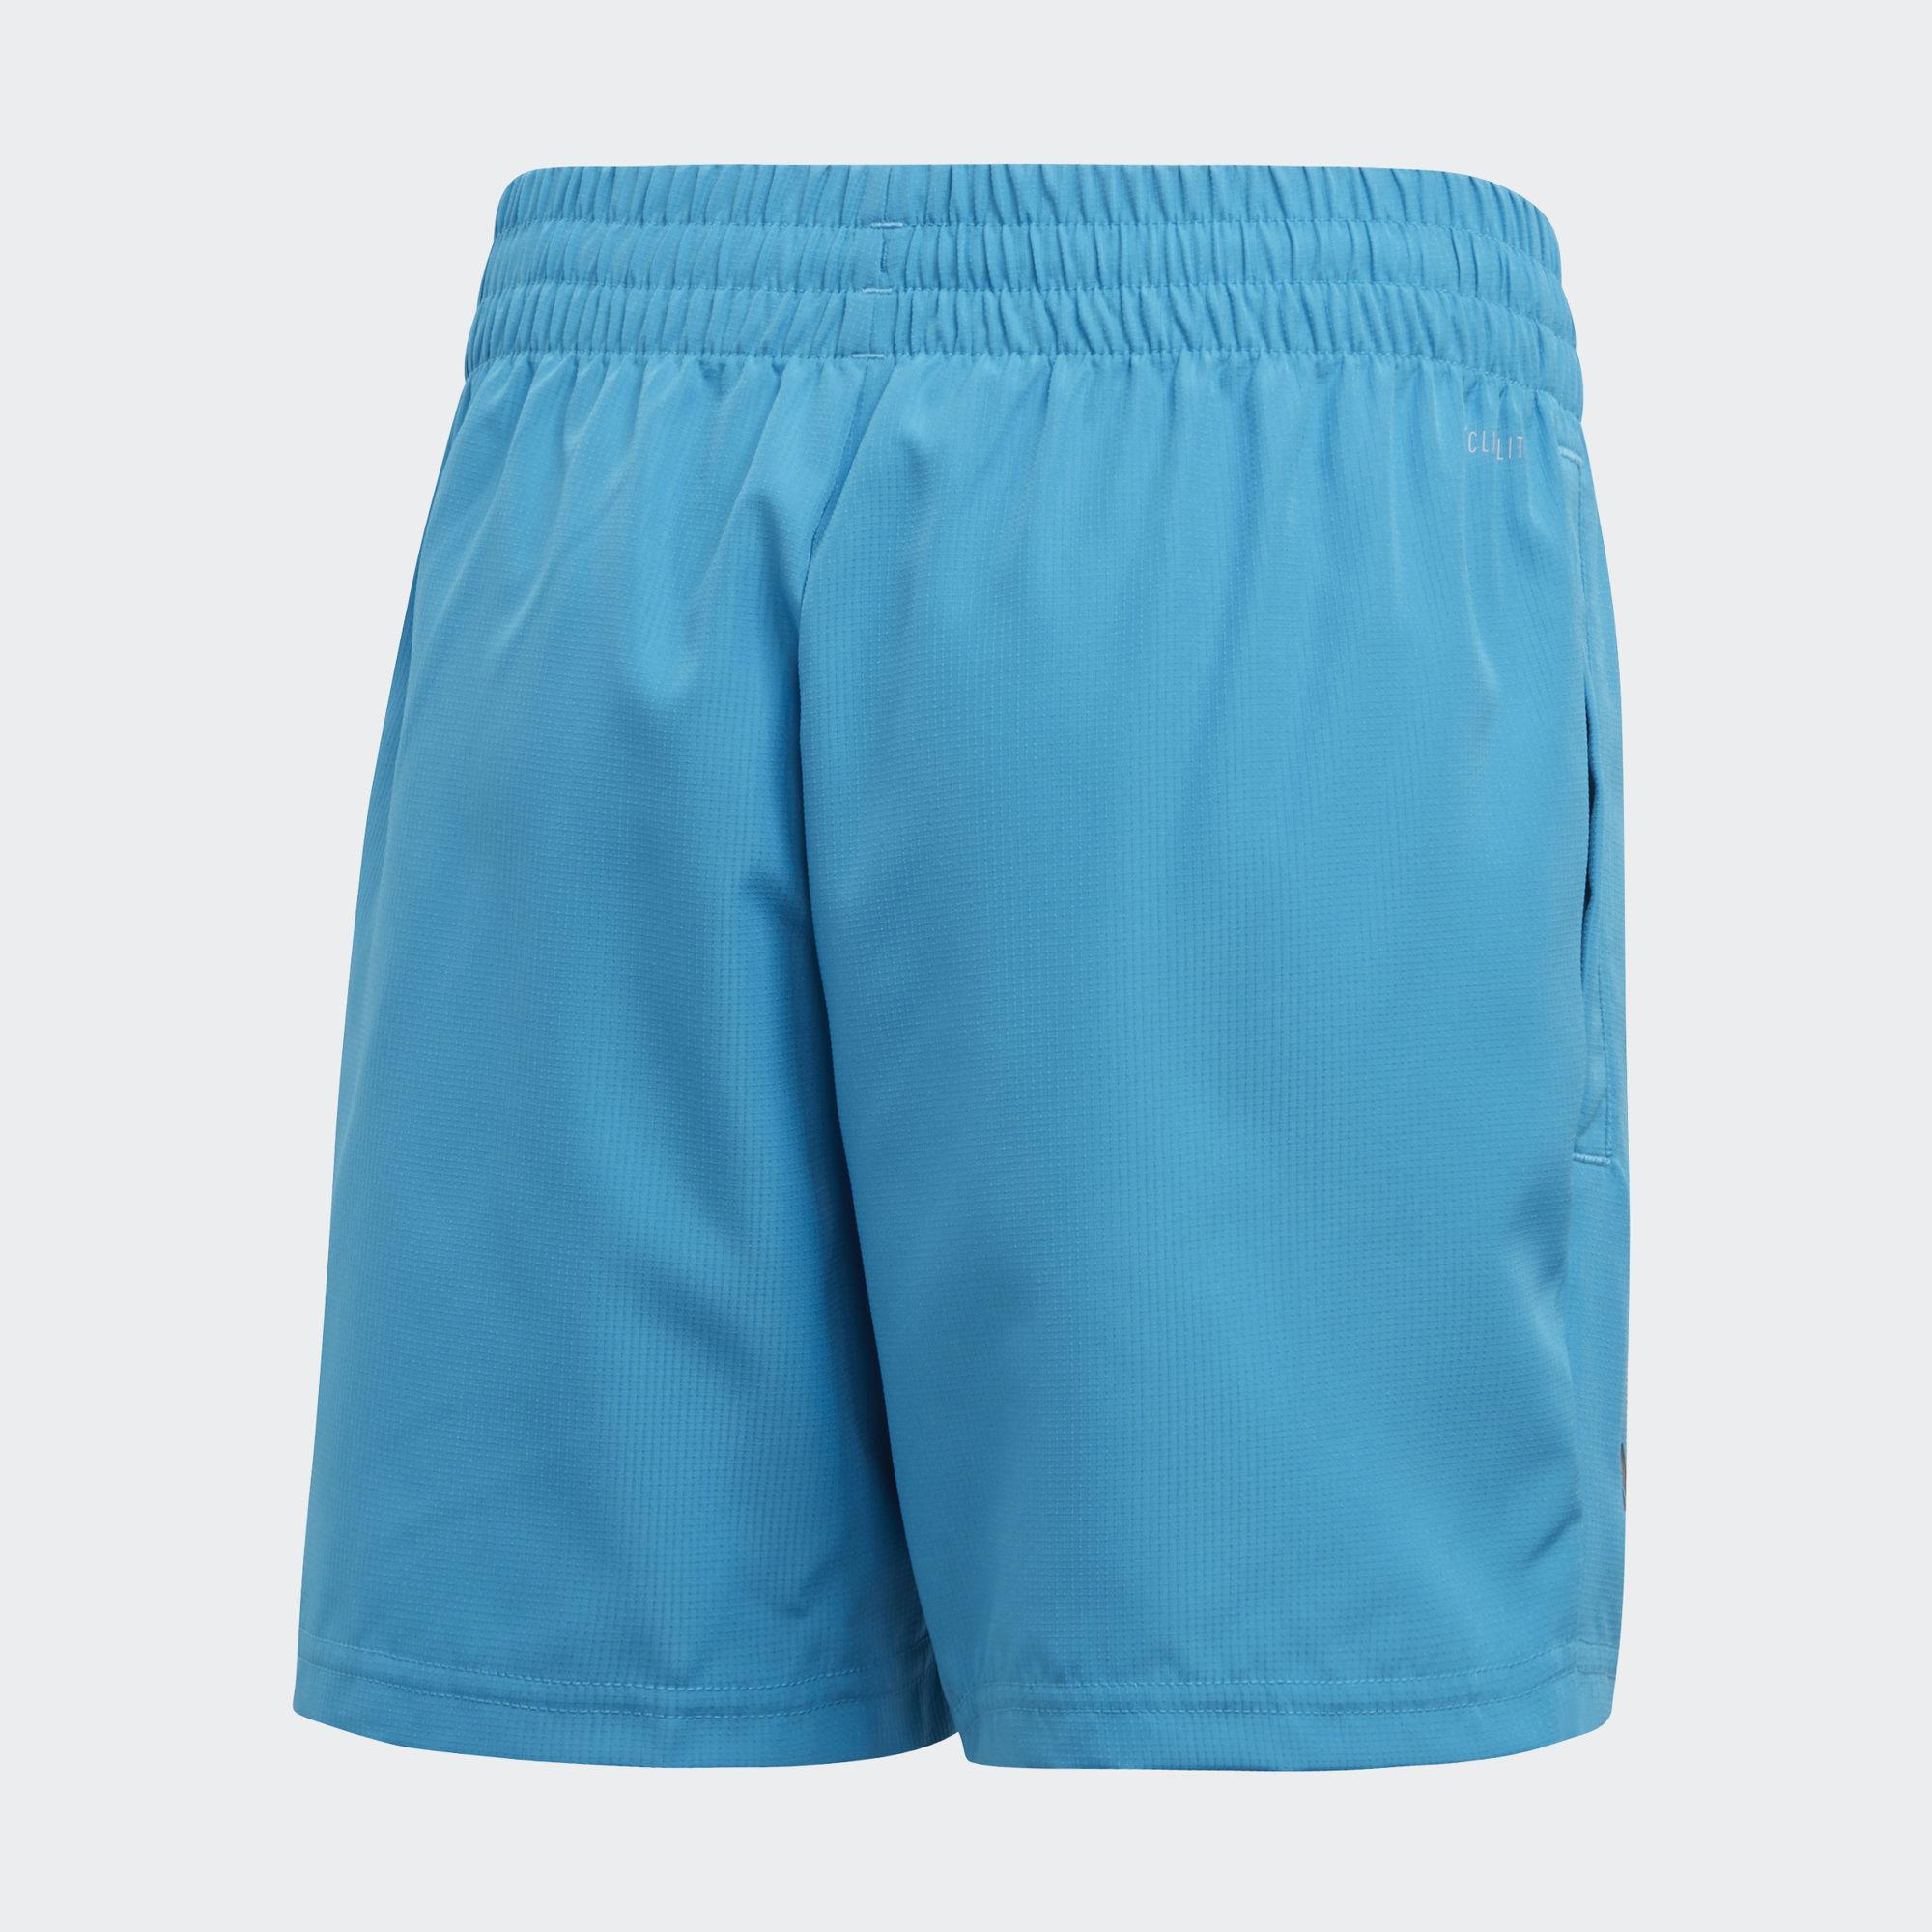 Adidas Boys Club Shorts - Blue - Tennisnuts.com